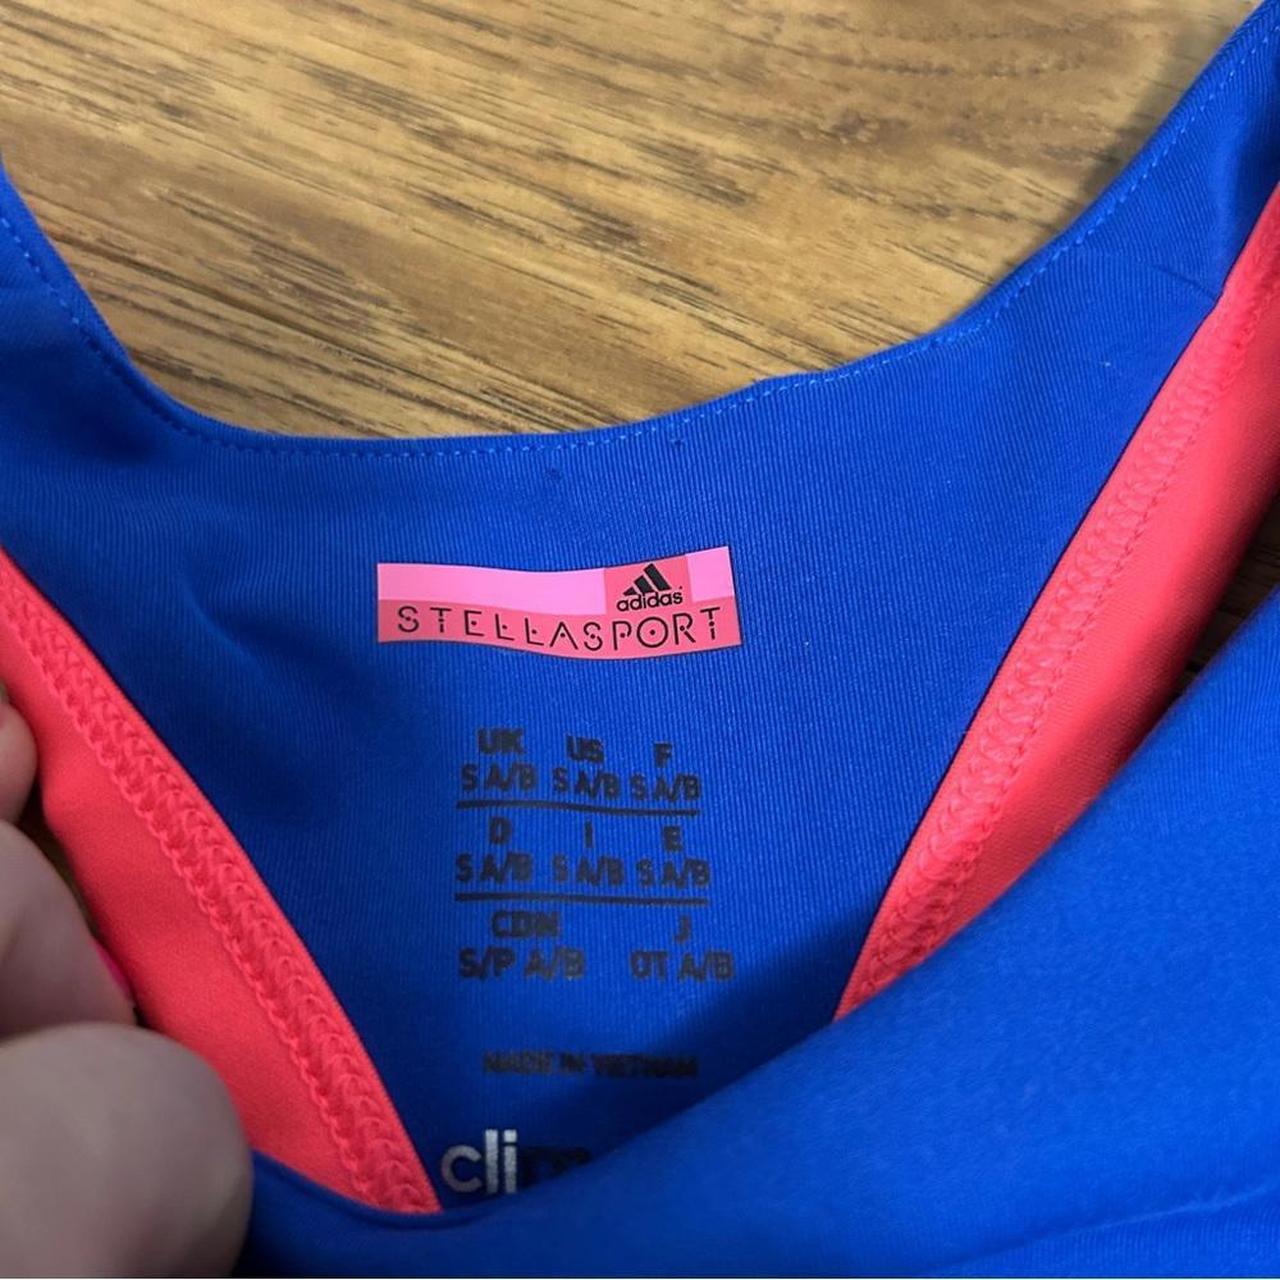 Gorgeous Adidas x Stella sport sports bra in blue - Depop